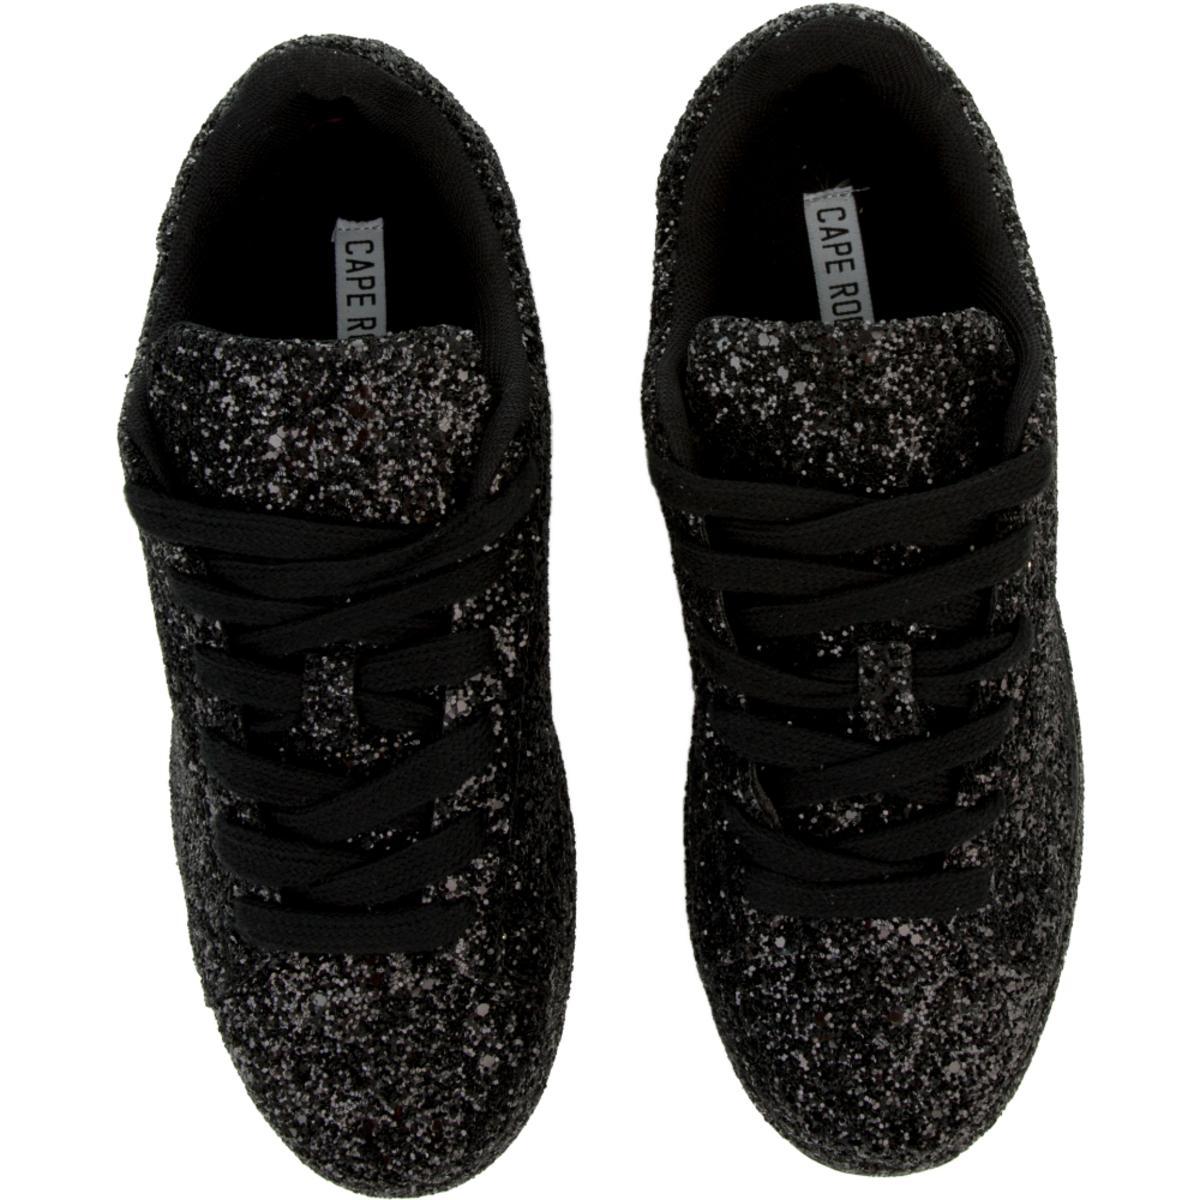 Cape Robbin Snappy-1 Sneaker Black